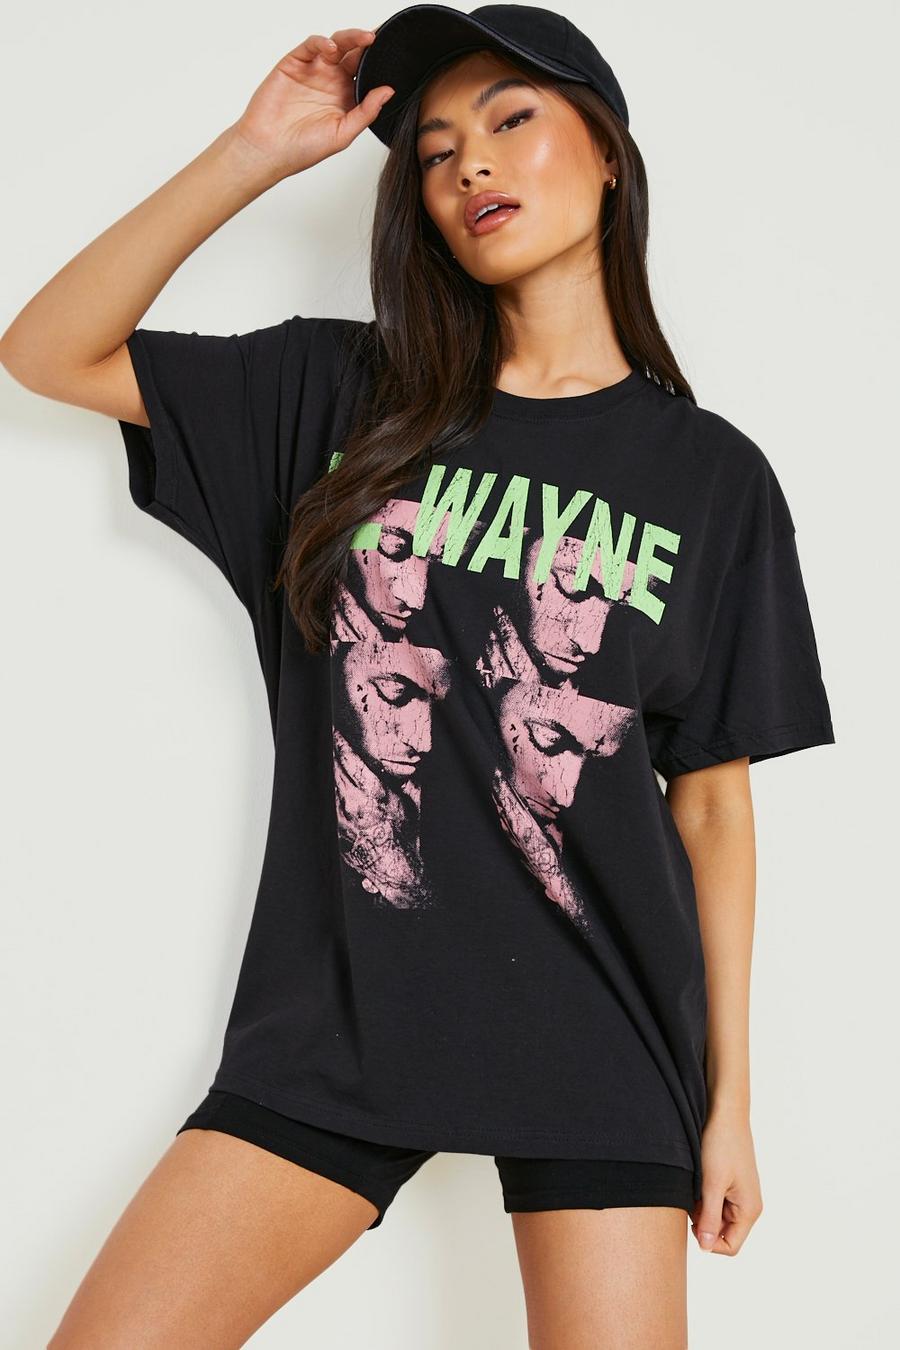 Charcoal grey Lil Wayne Back Print Overdyed Band T Shirt image number 1